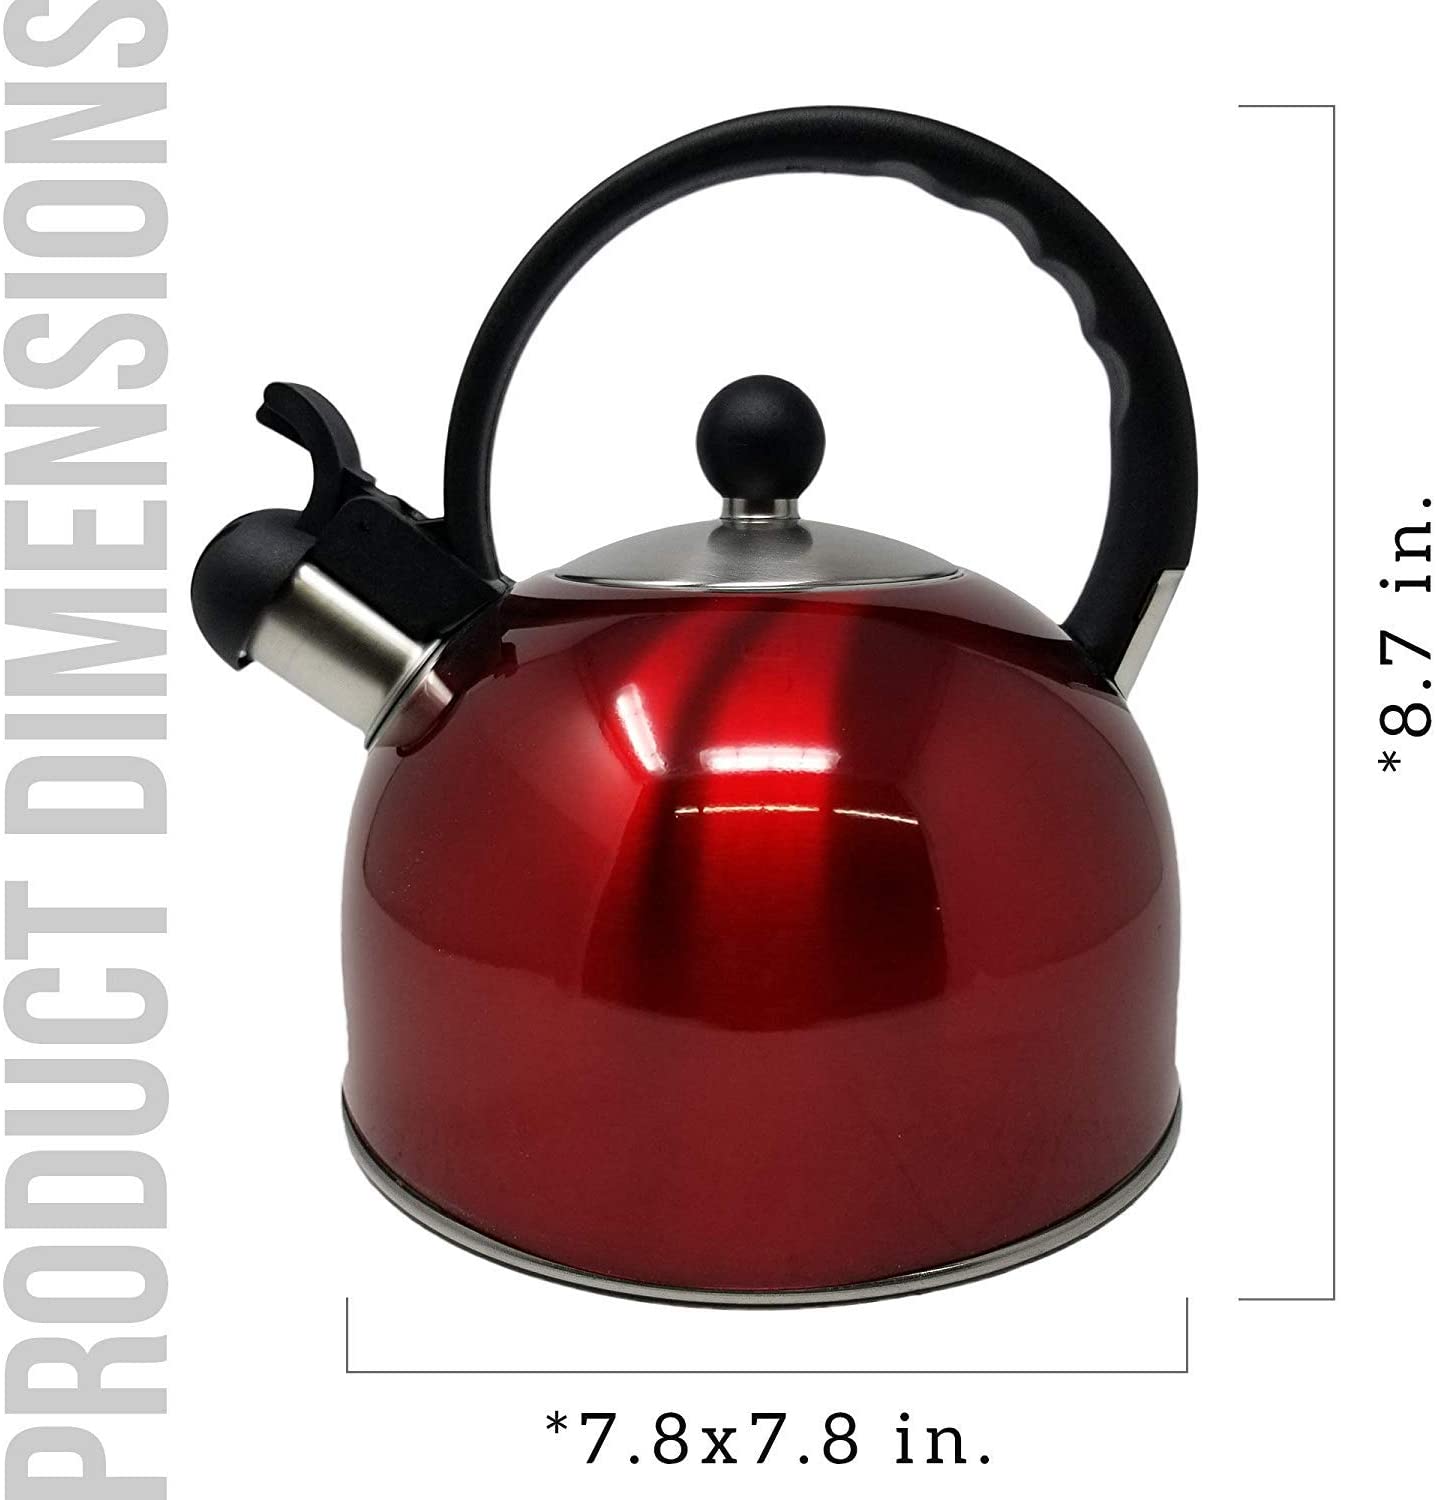 Whistling Tea Kettle 2.5L Stainless Steel Stovetop Kettle TeaPot